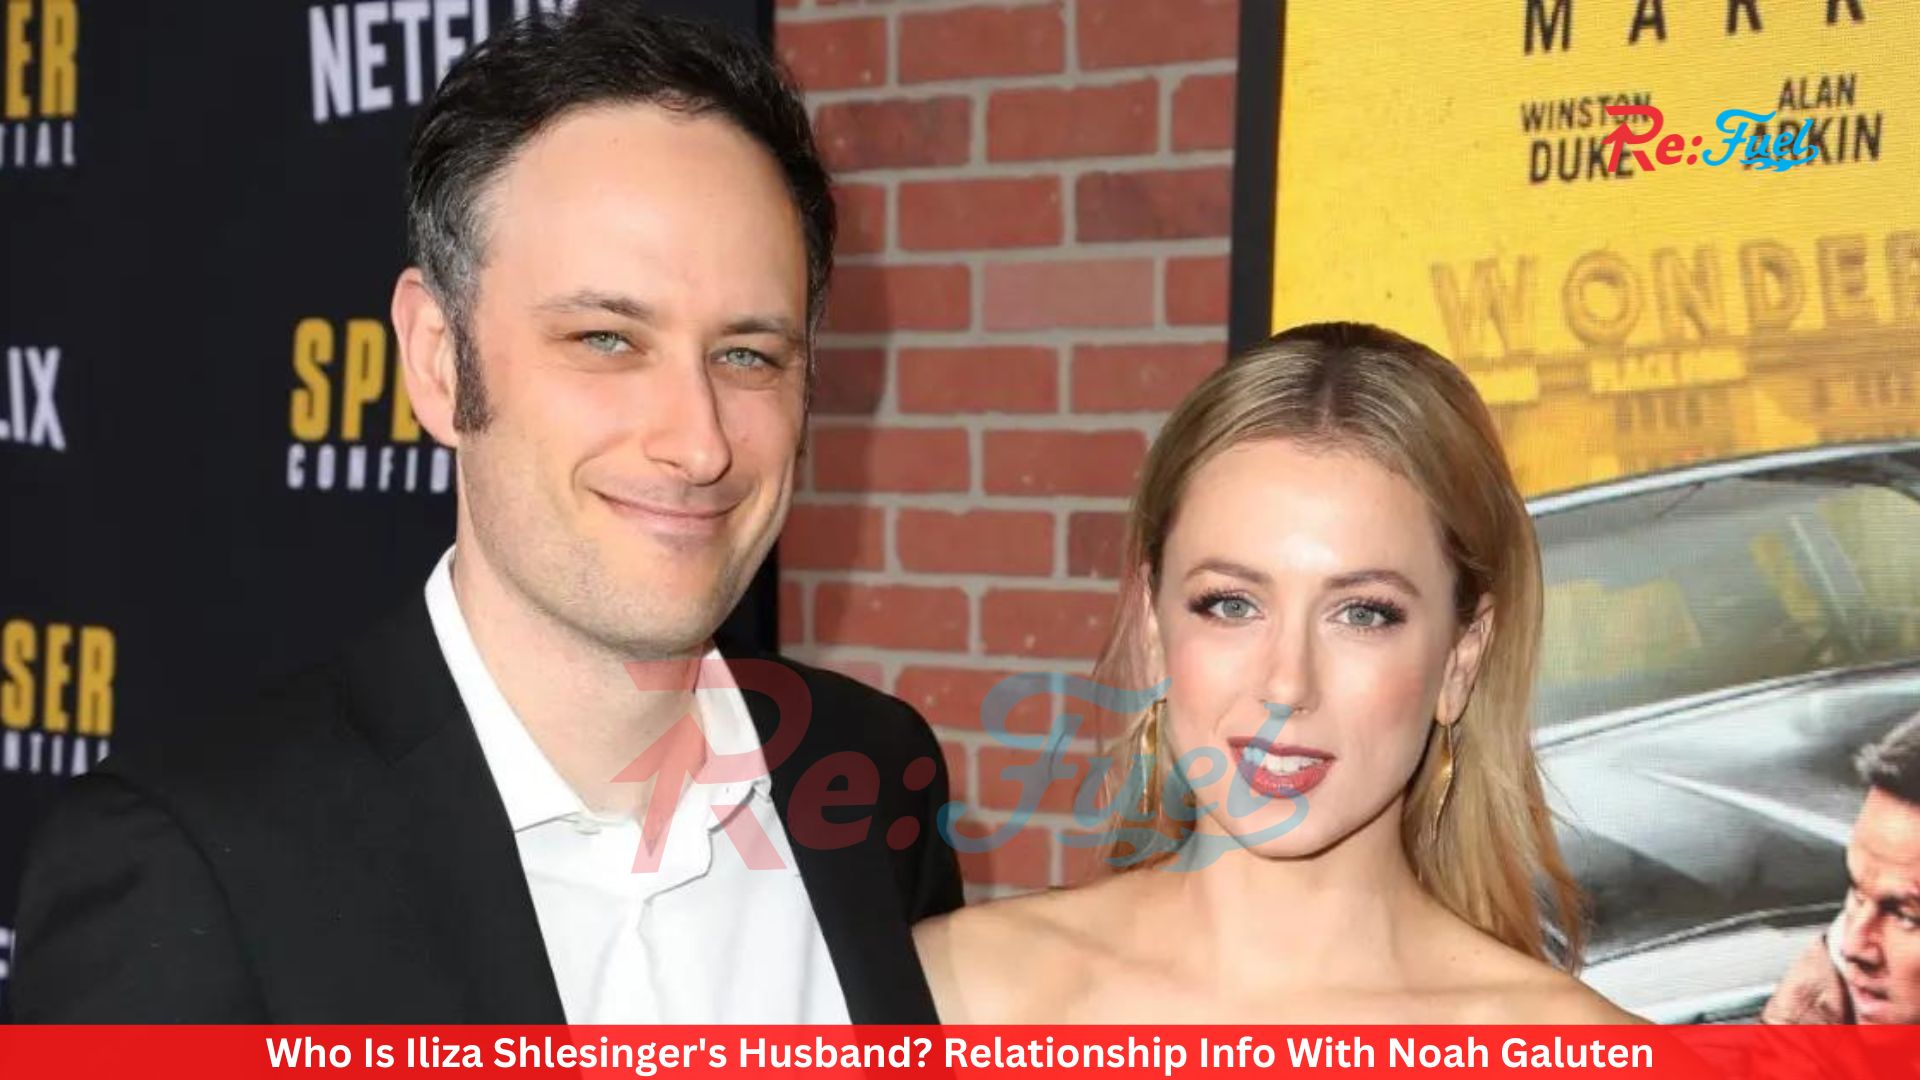 Who Is Iliza Shlesinger's Husband? Relationship Info With Noah Galuten